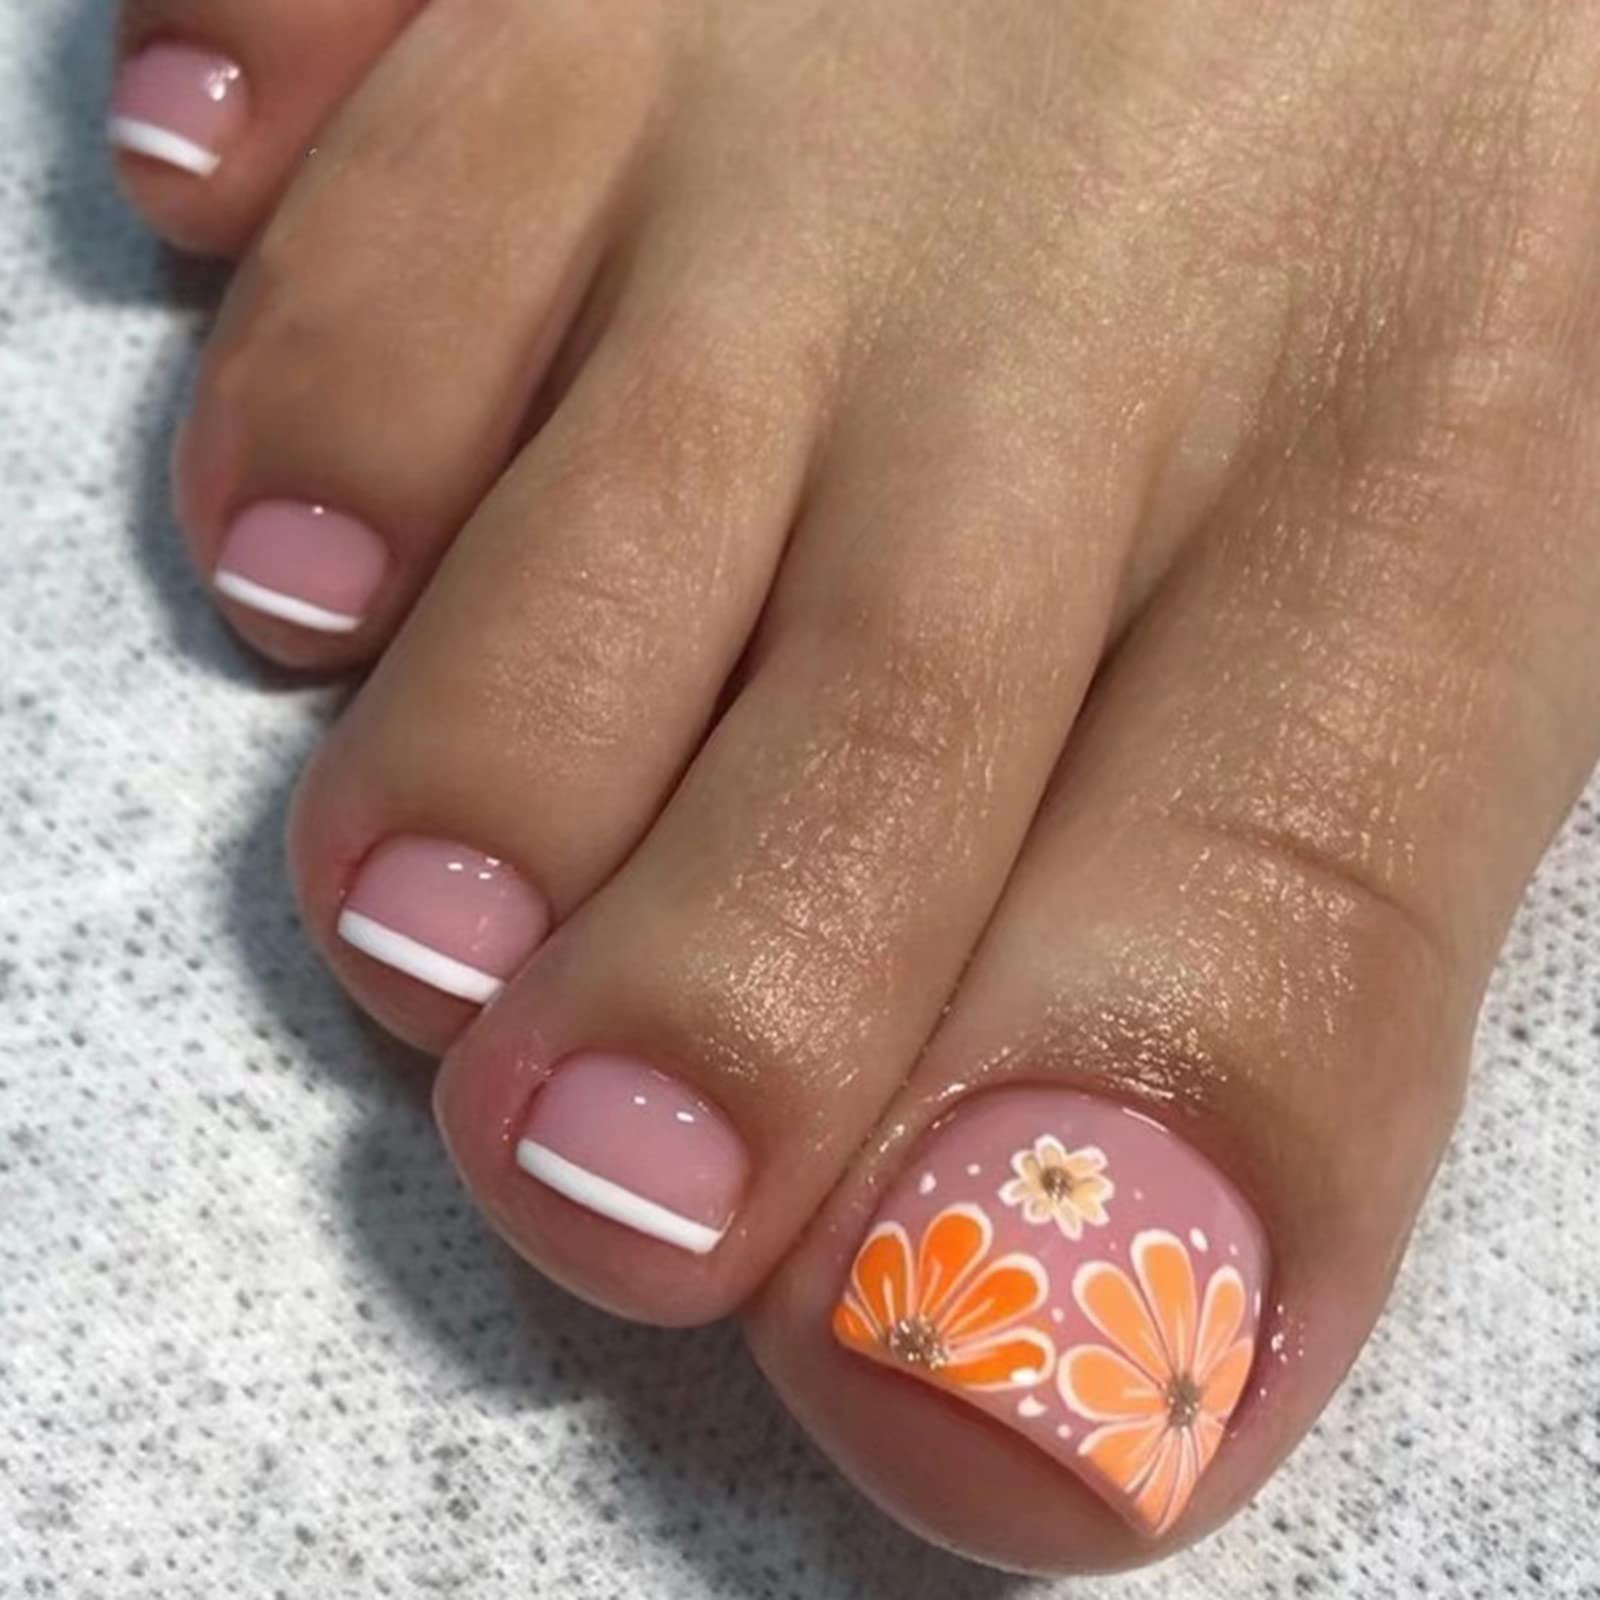 toe nails design Archives - Styleoholic